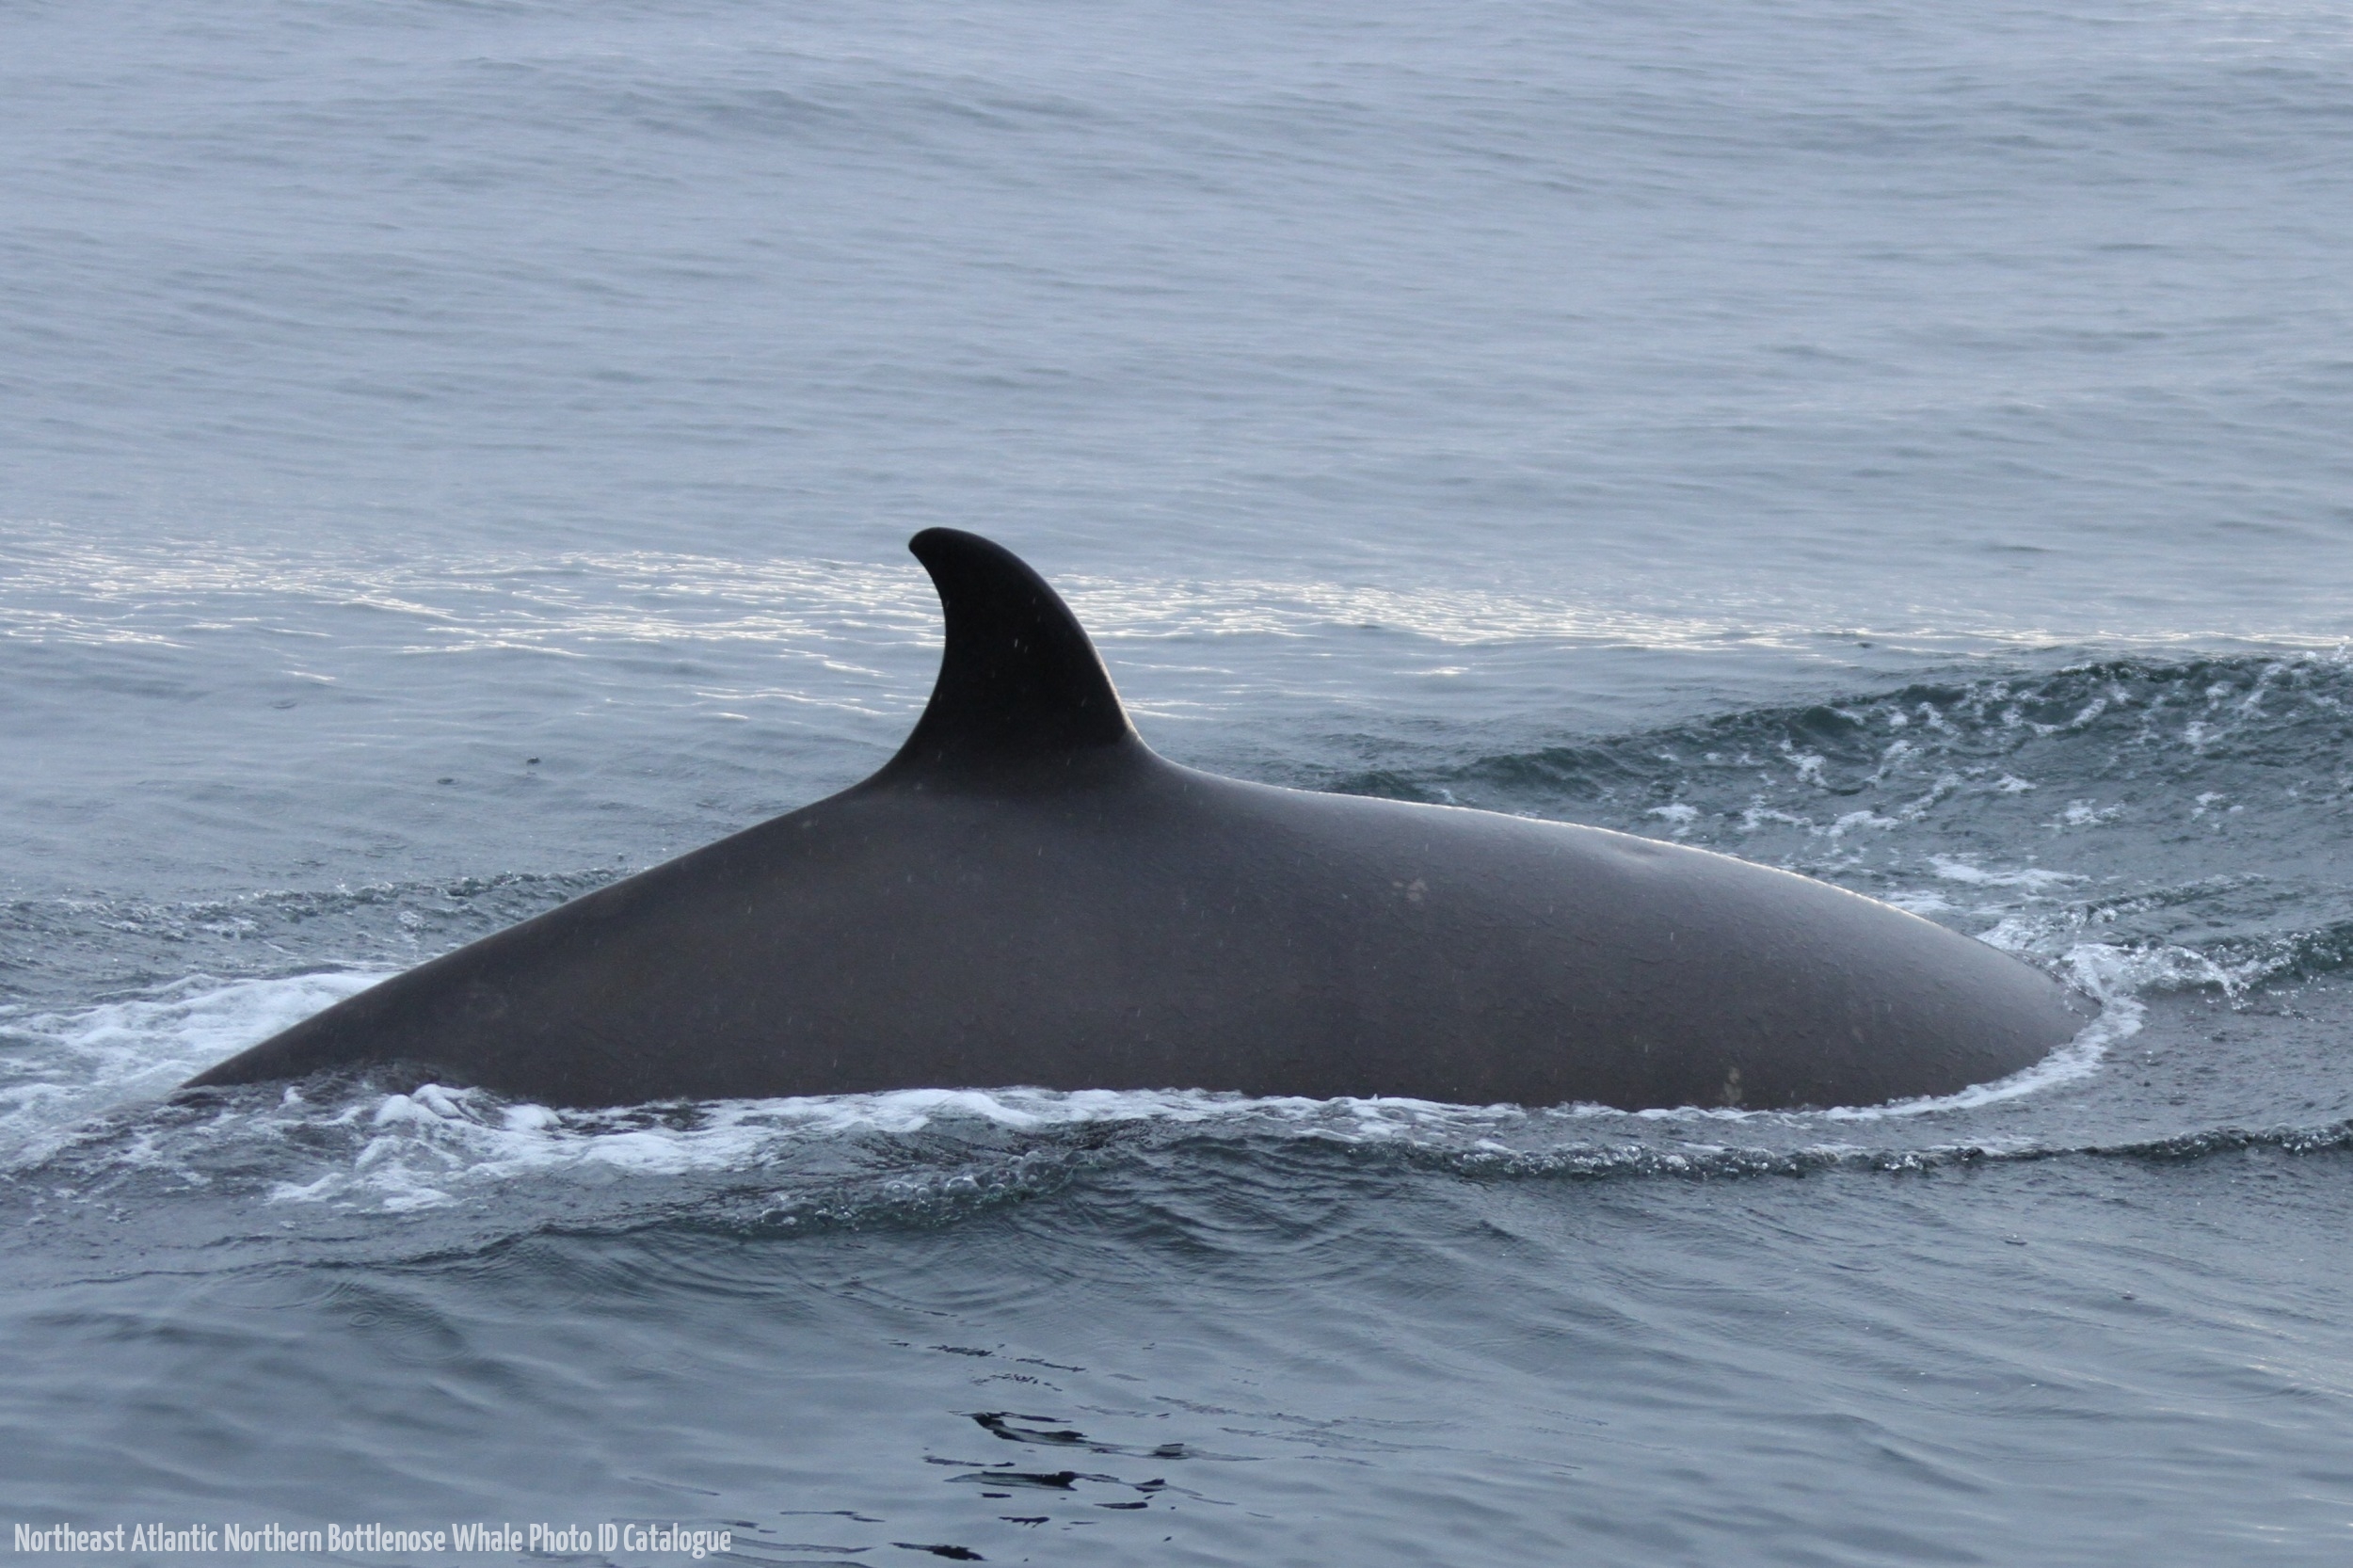 Whale ID: 0251,  Date taken: 24-06-2013,  Photographer: Paul H. Ensor